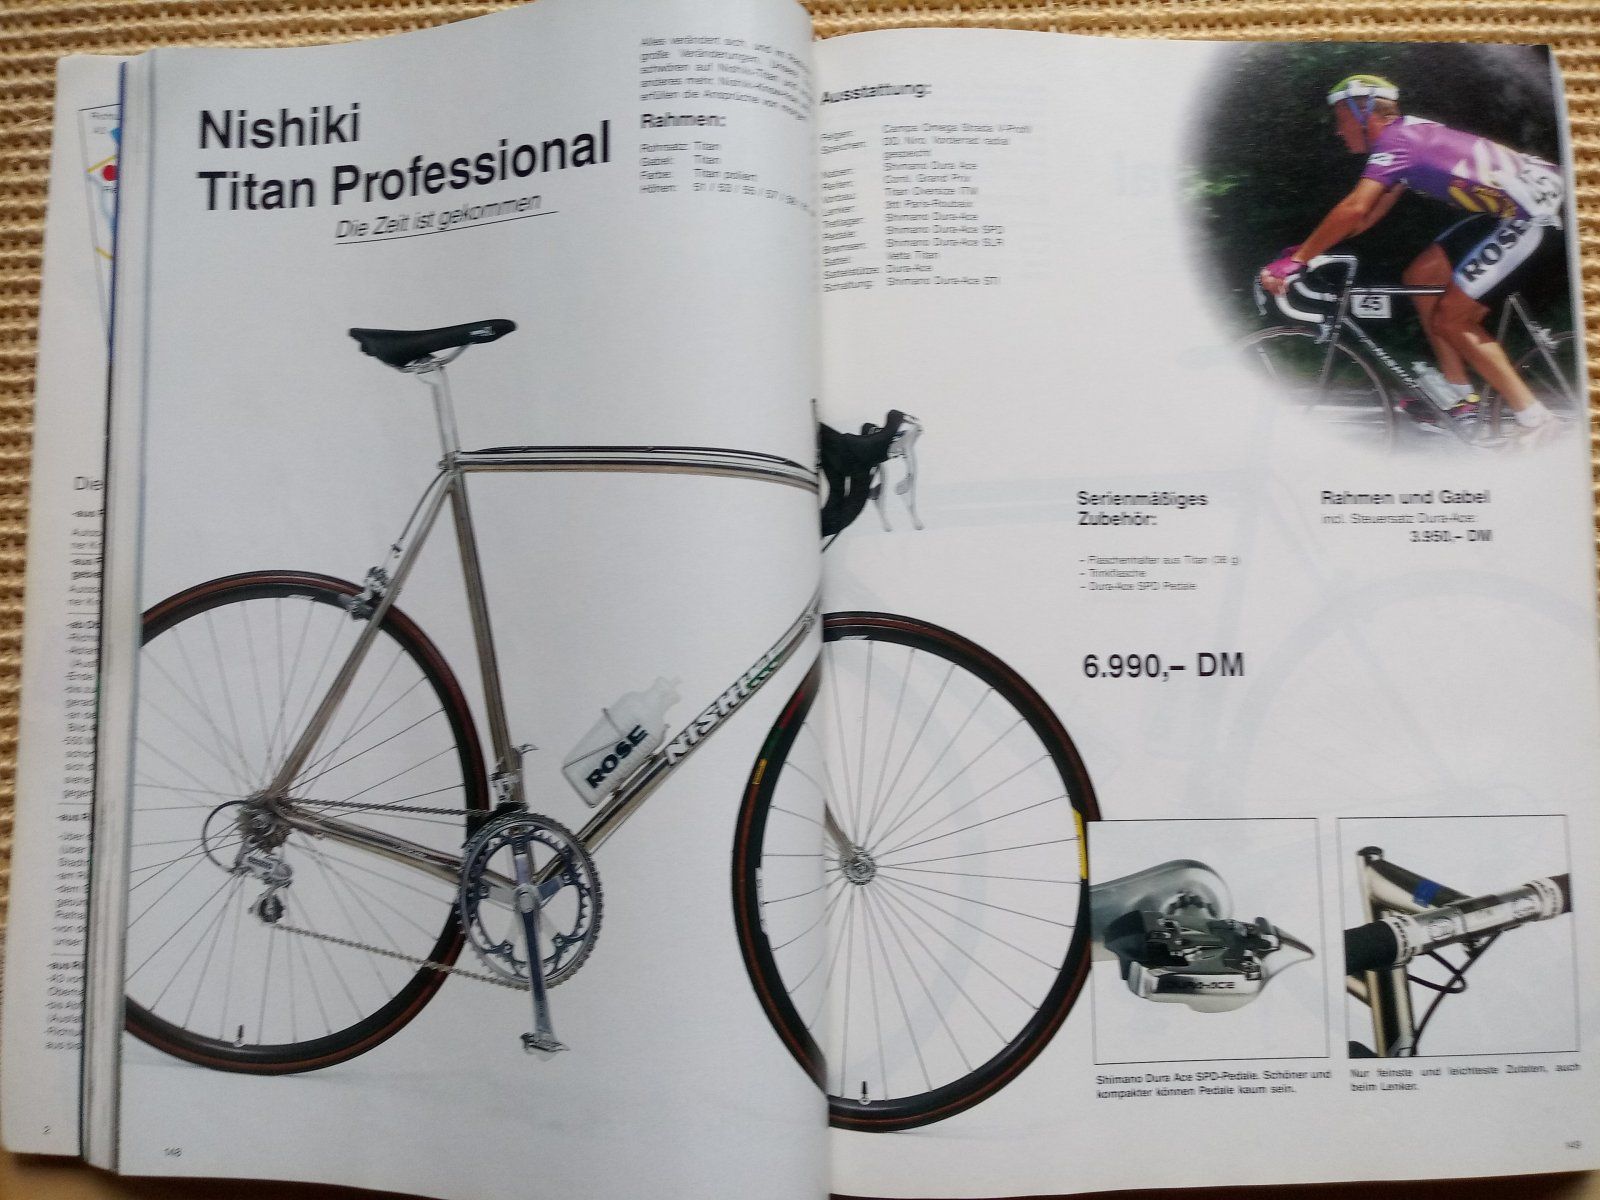 Nishiki Professional Titan 1993-94 auf Rose Katalog.jpg